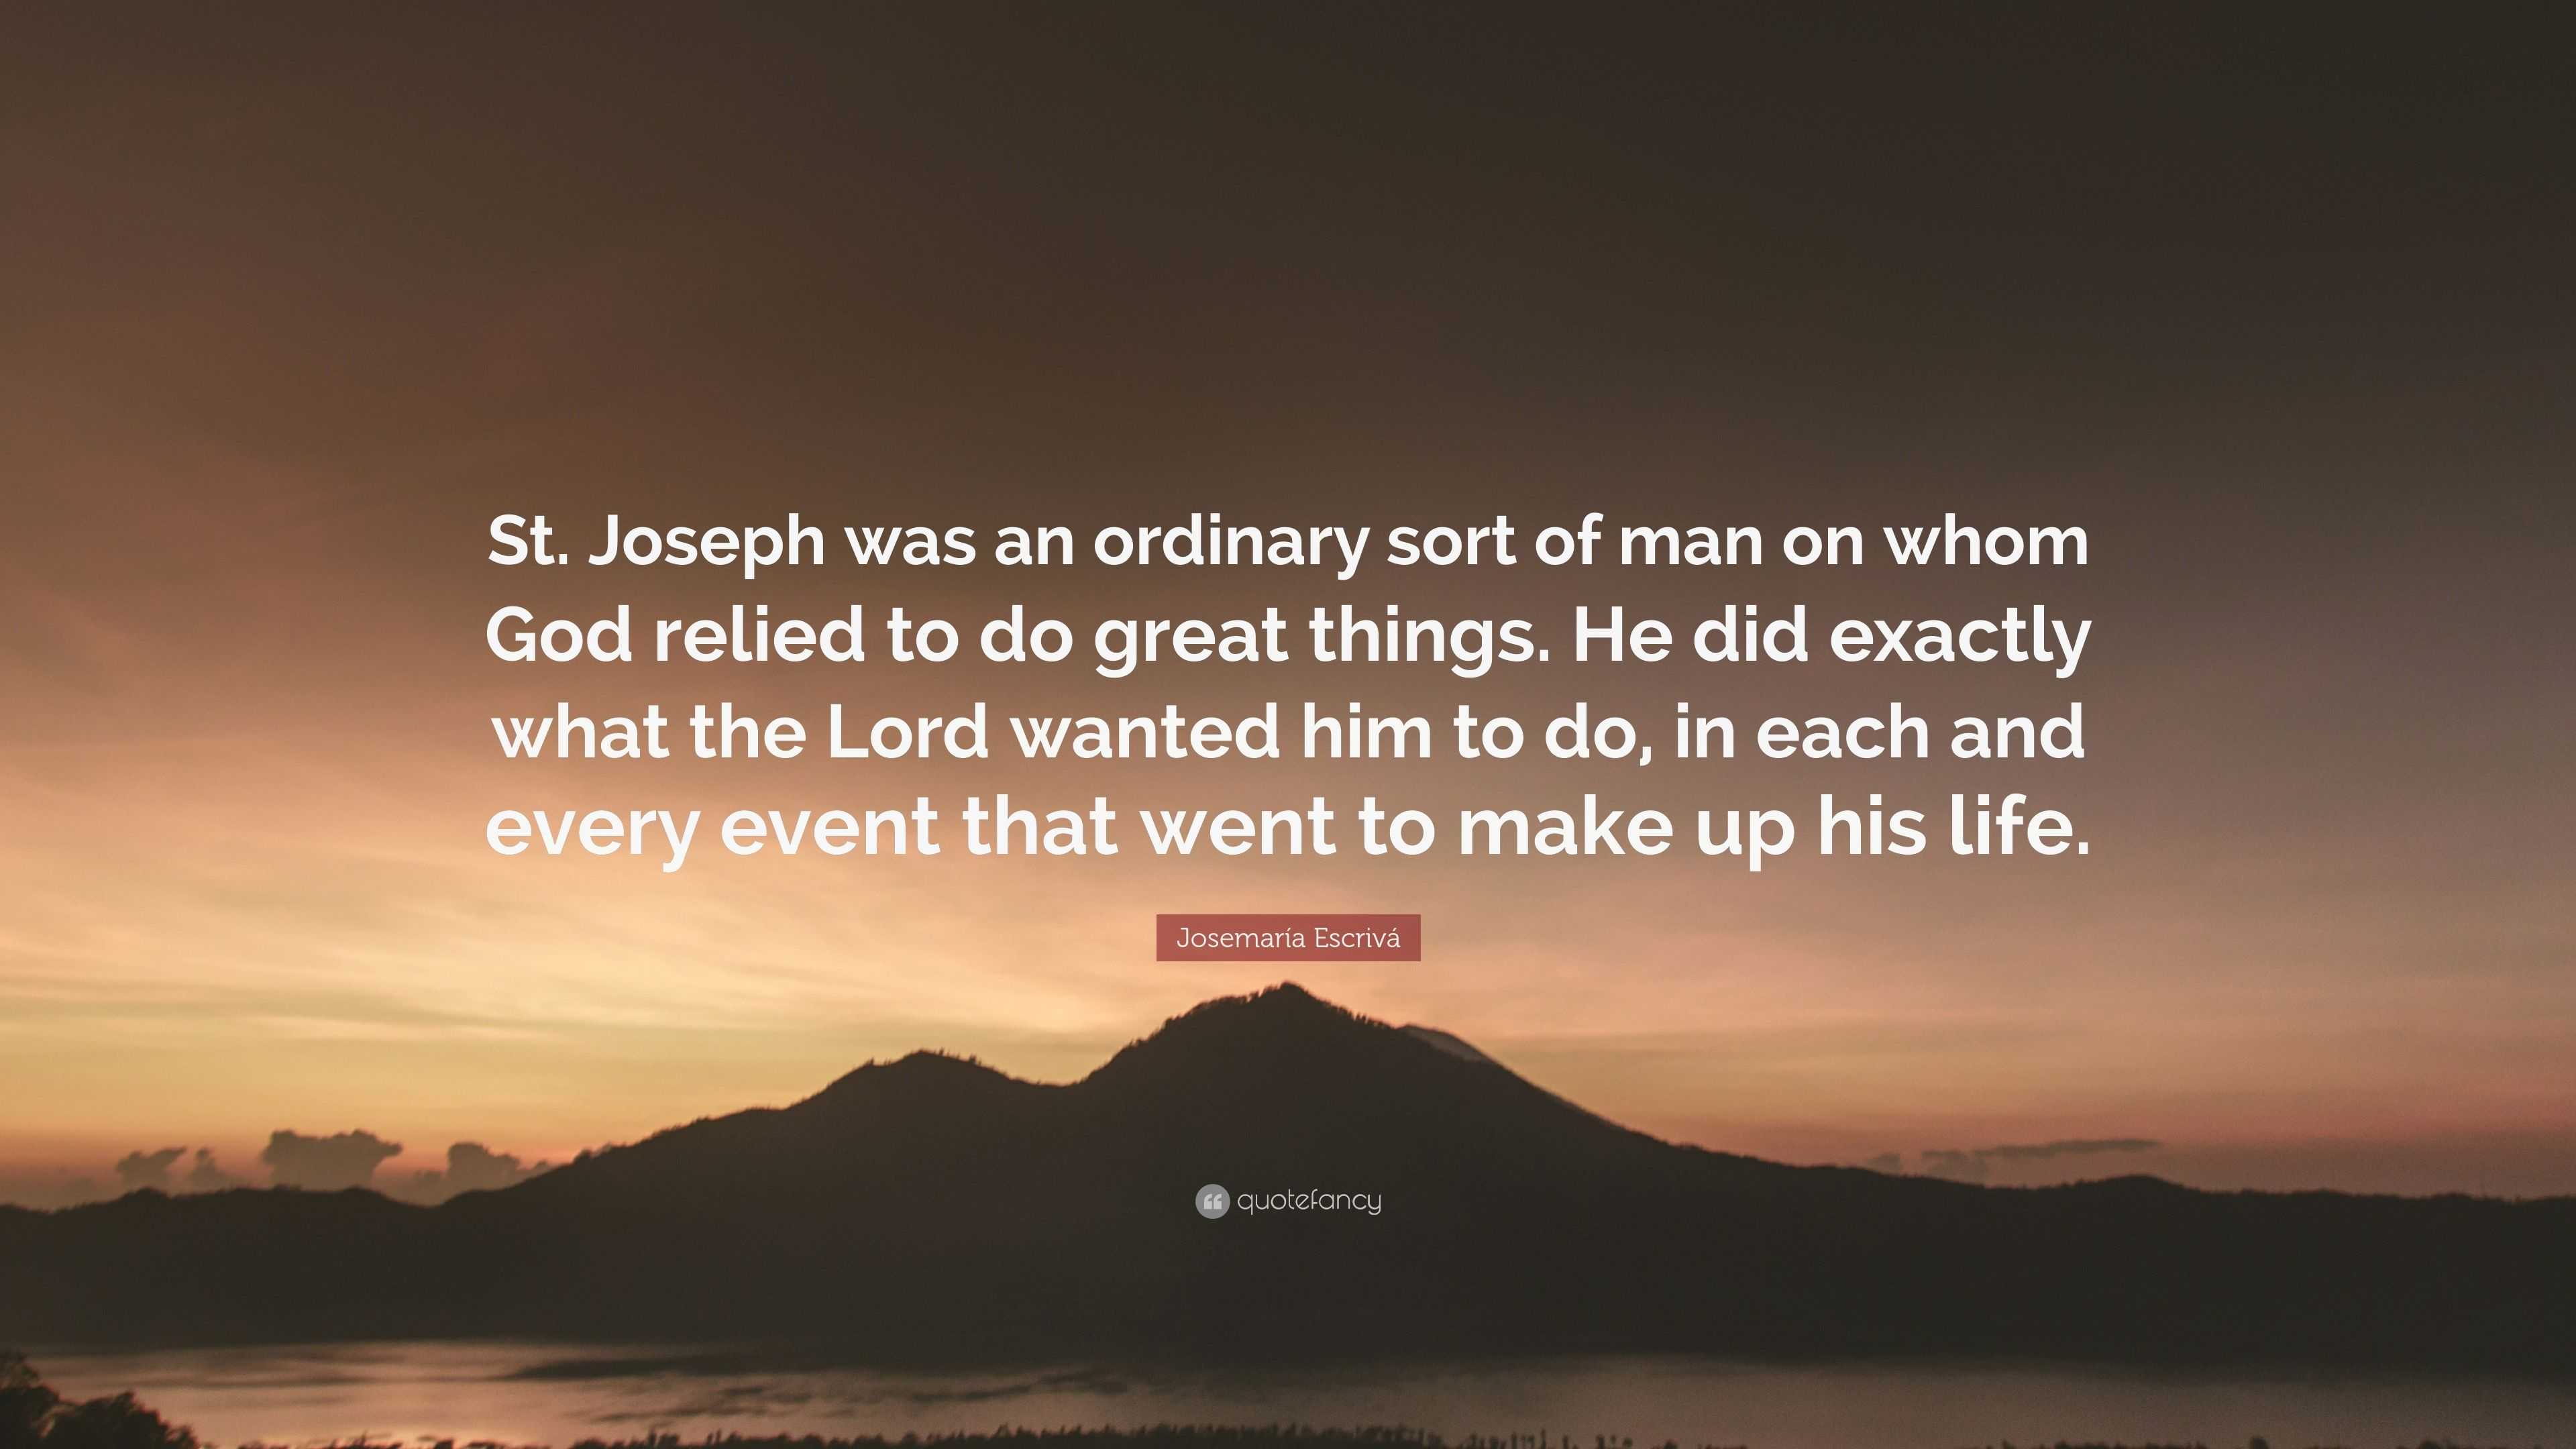 Josemaría Escrivá Quote: “St. Joseph was an ordinary sort of man on ...